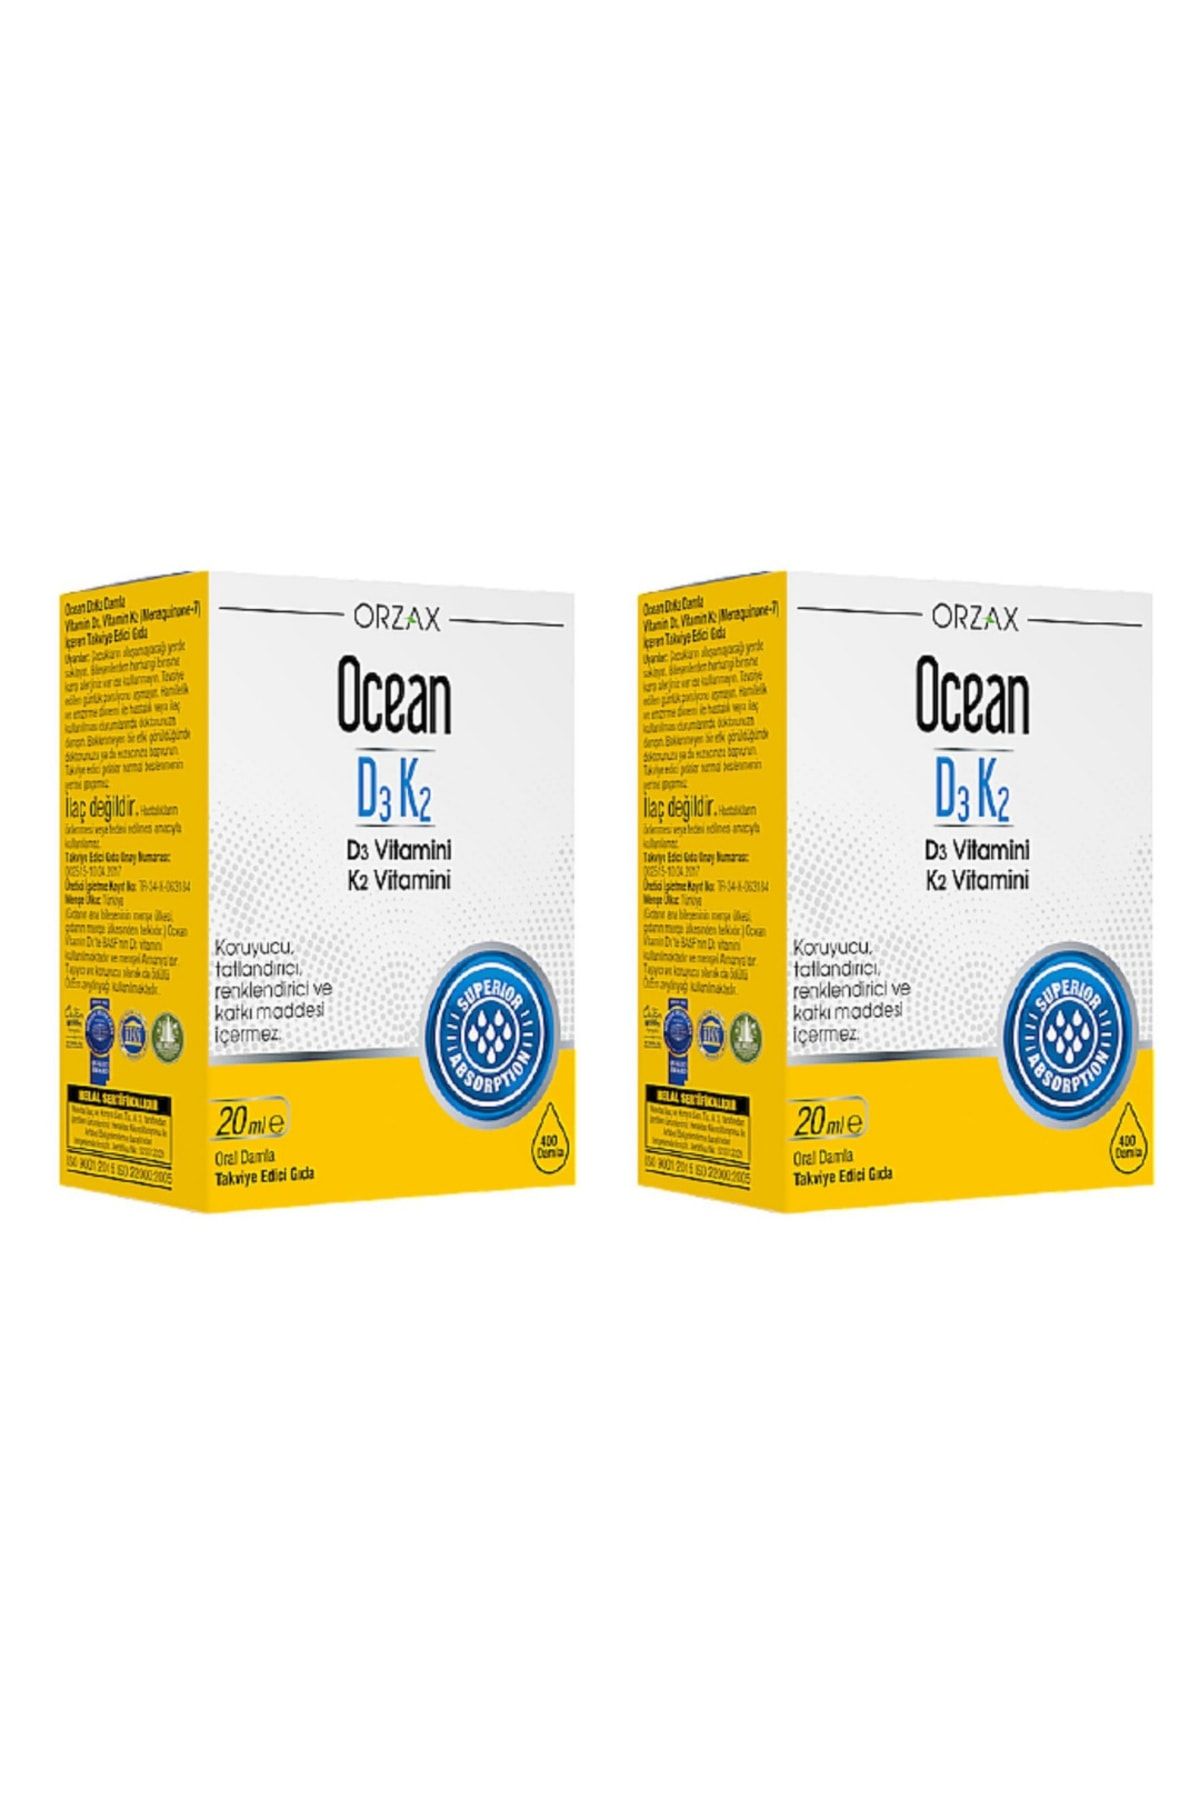 Ocean Orzax D3 K2 Vitamini 2'li Set